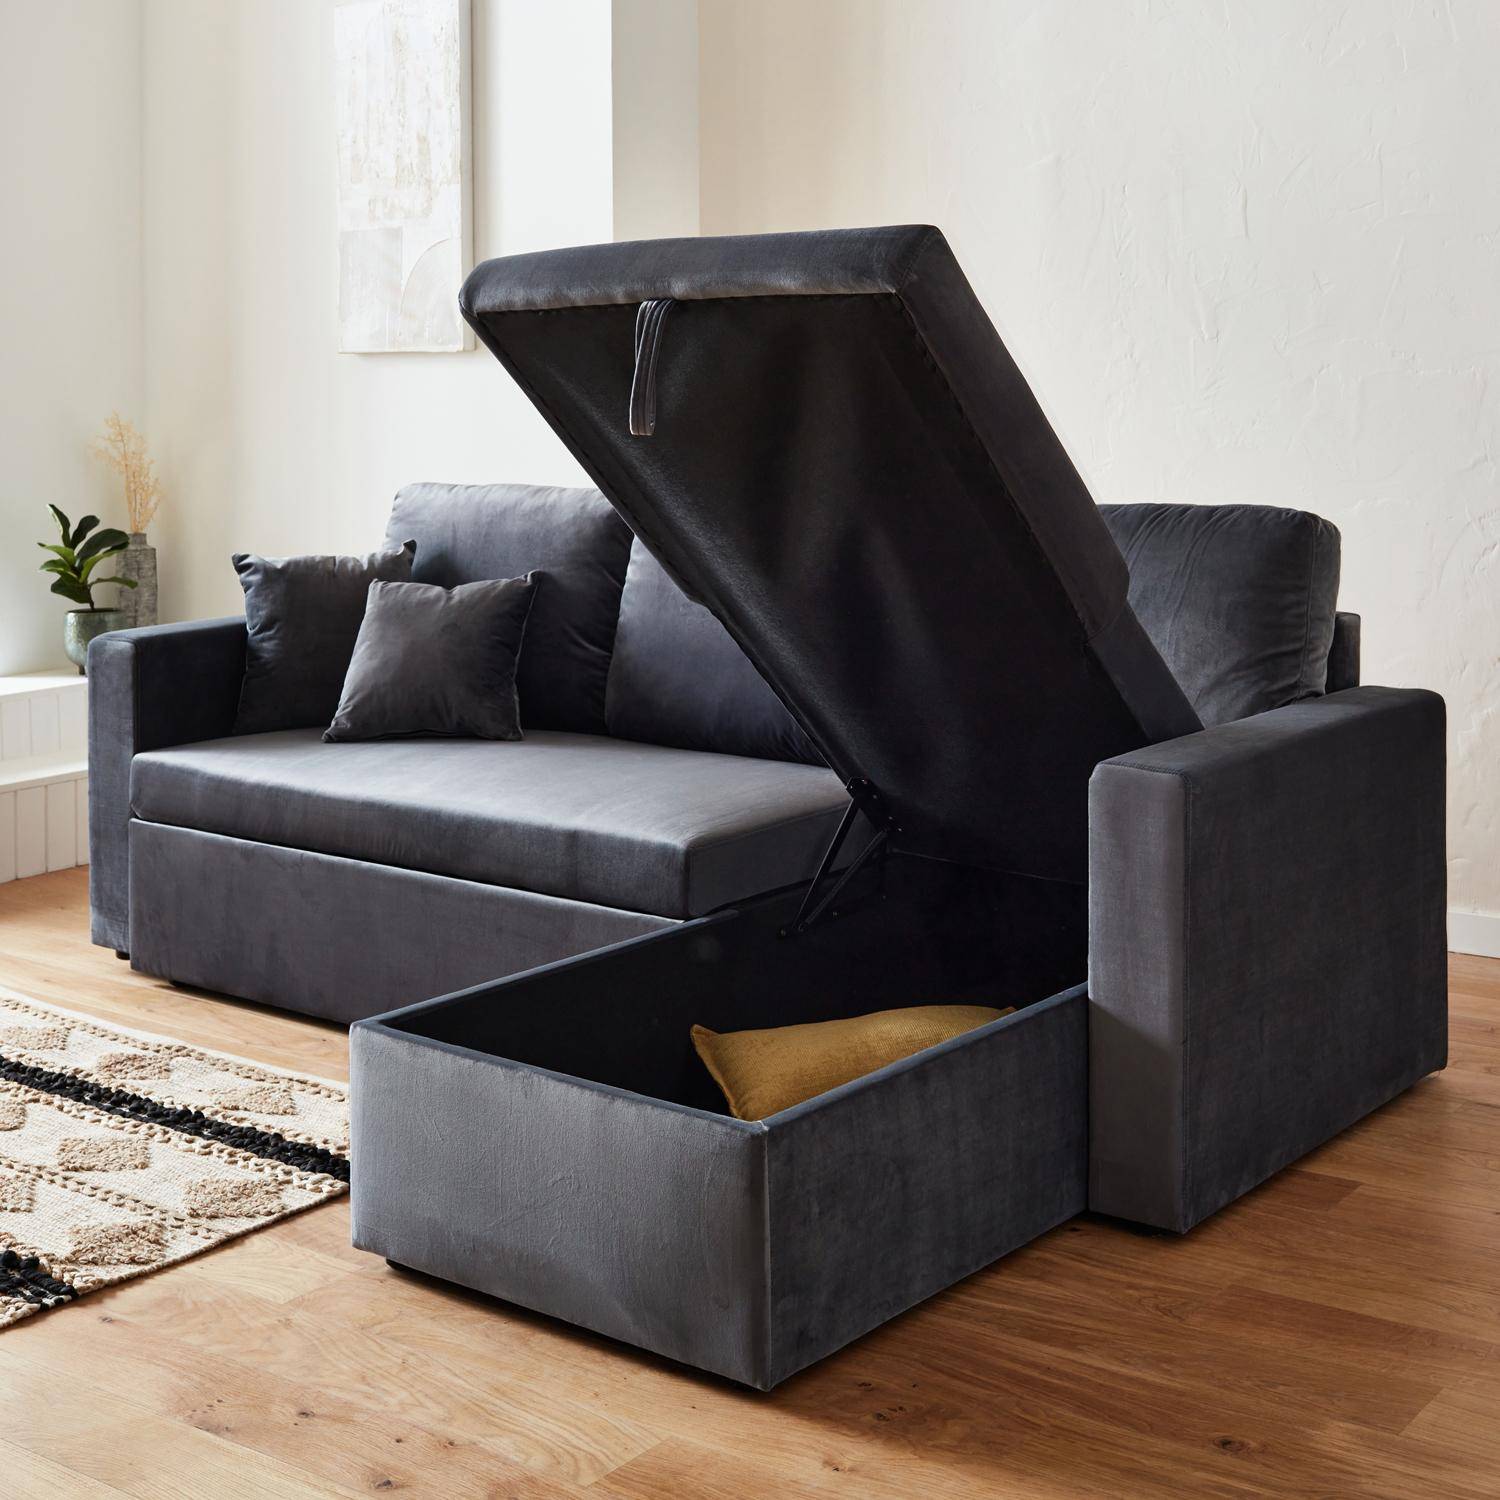 Dark grey velvet 3-seater convertible corner sofa, reversible corner armchair, storage box, modular bed Photo2